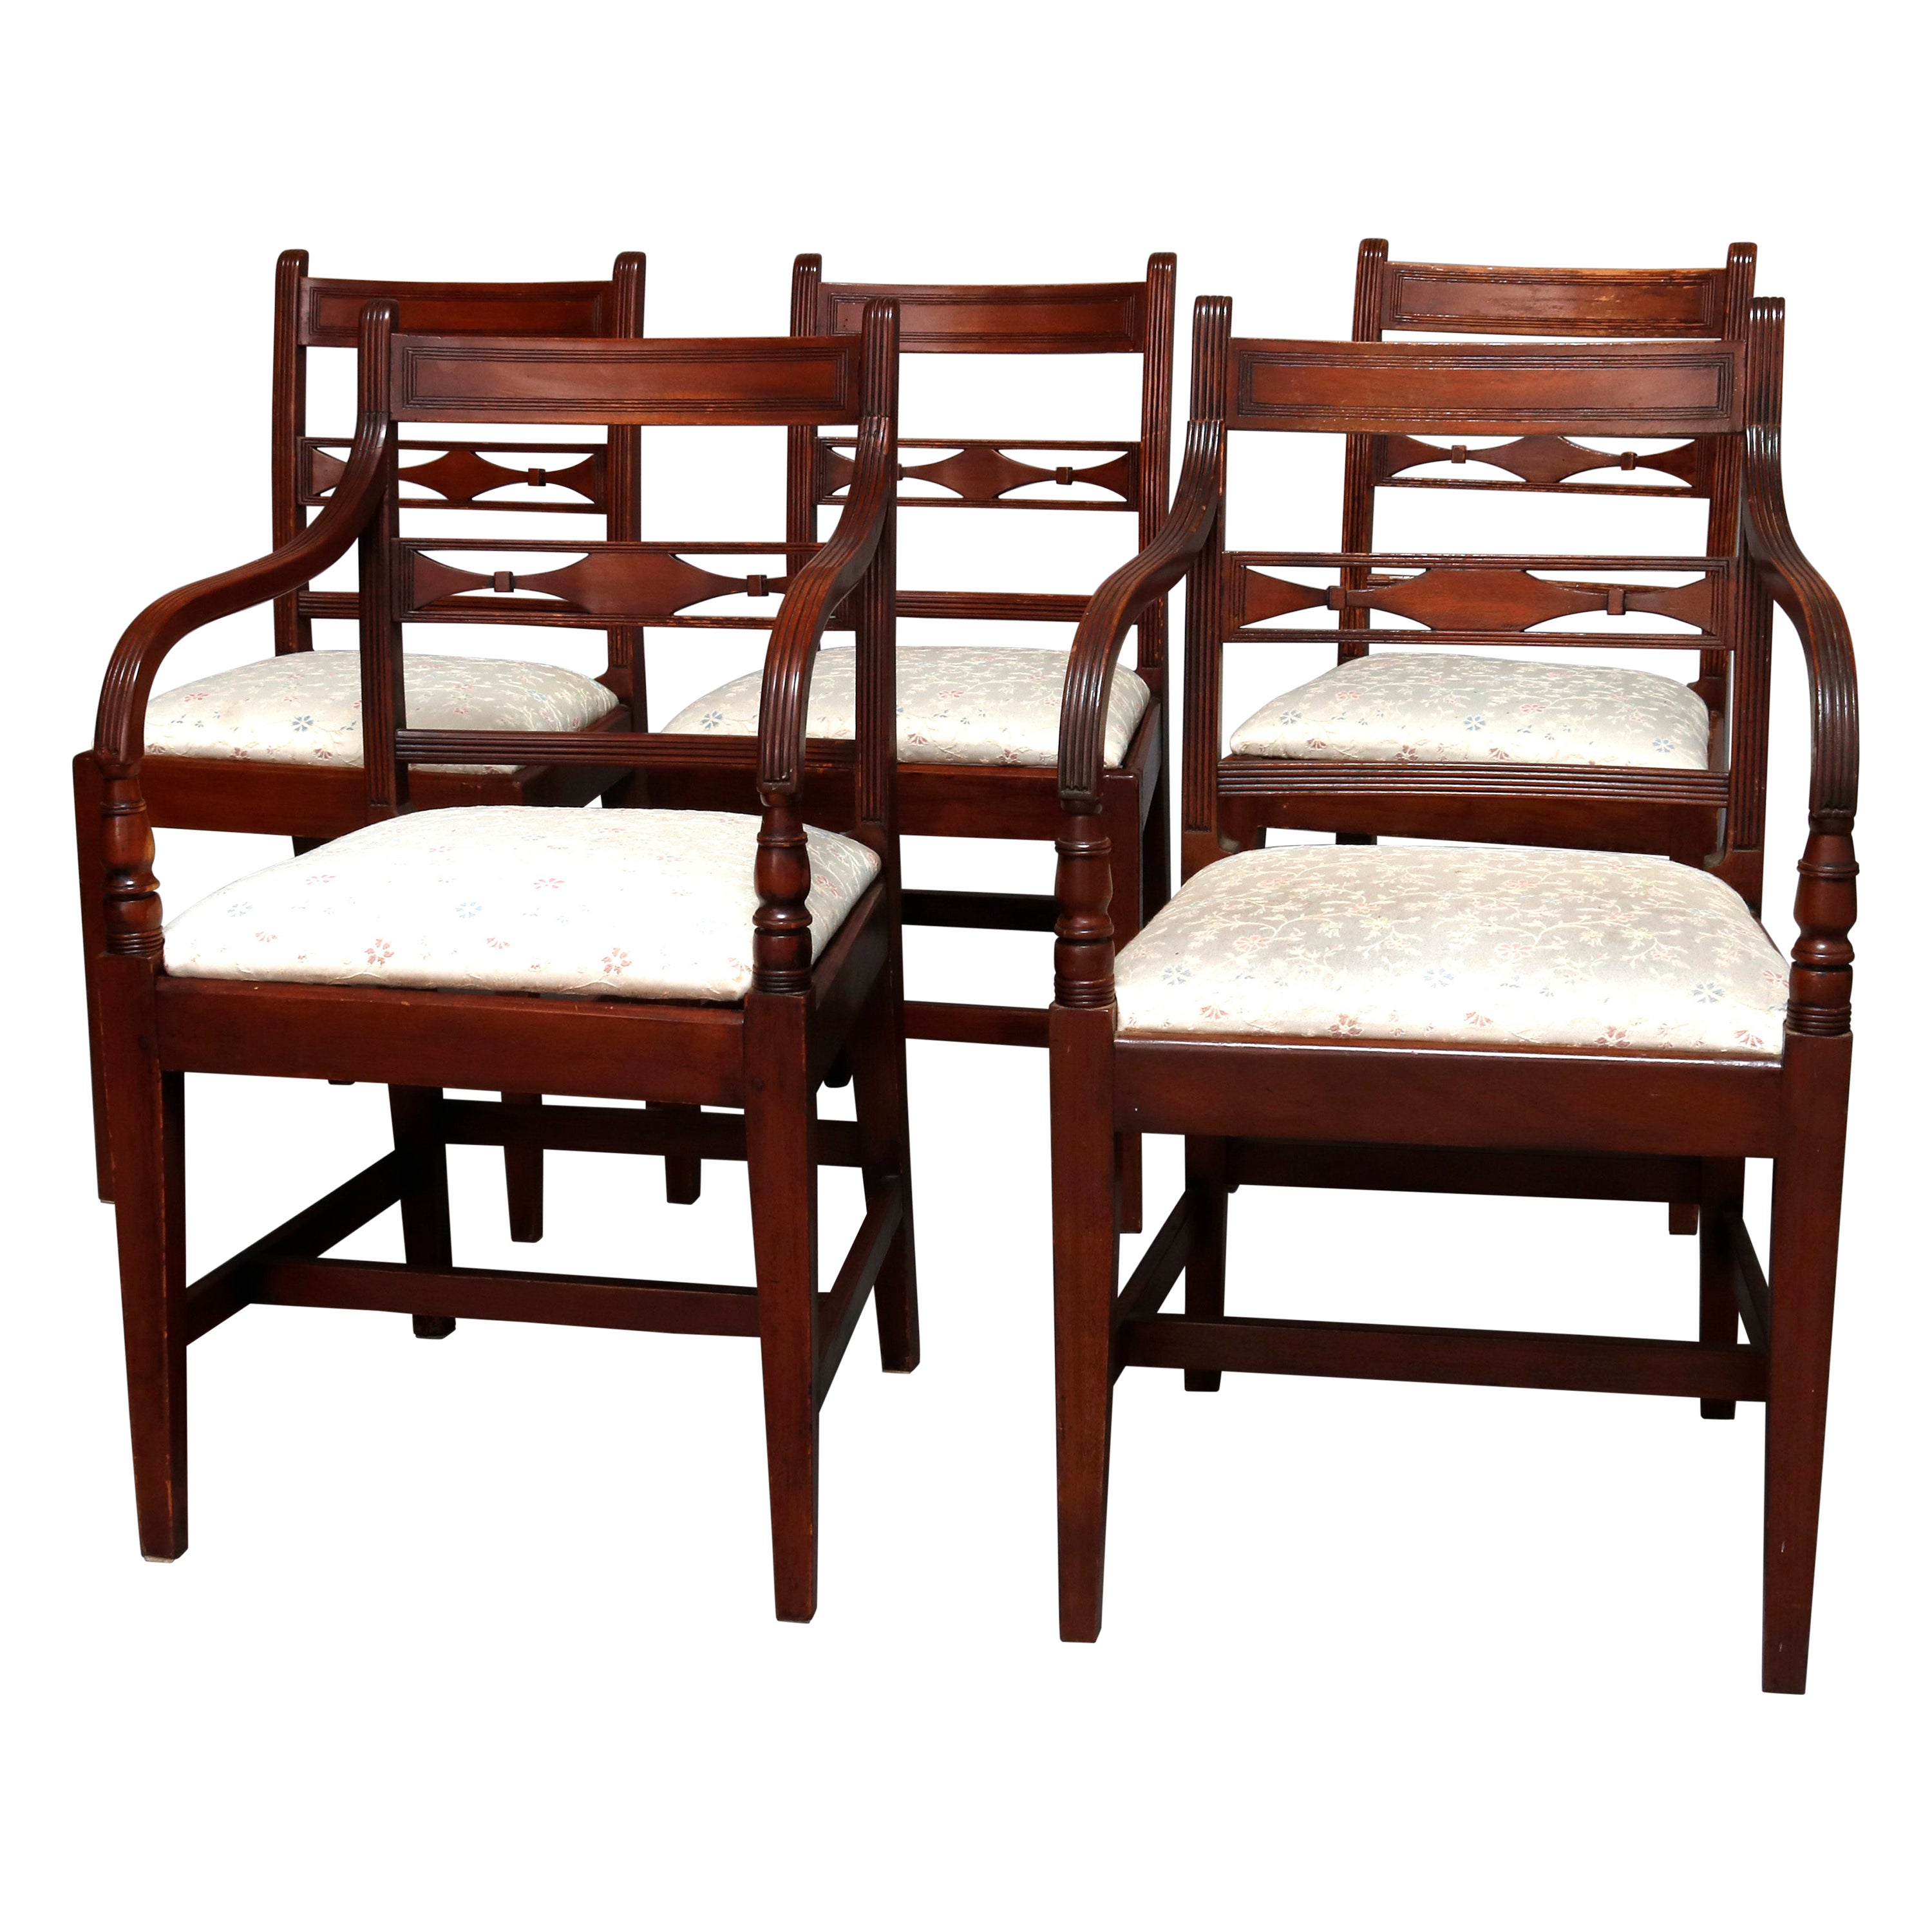 Голодный стул. Antique Chairs - 27,670 for sale at 1stdibs. Стул от 1800 до 2500.